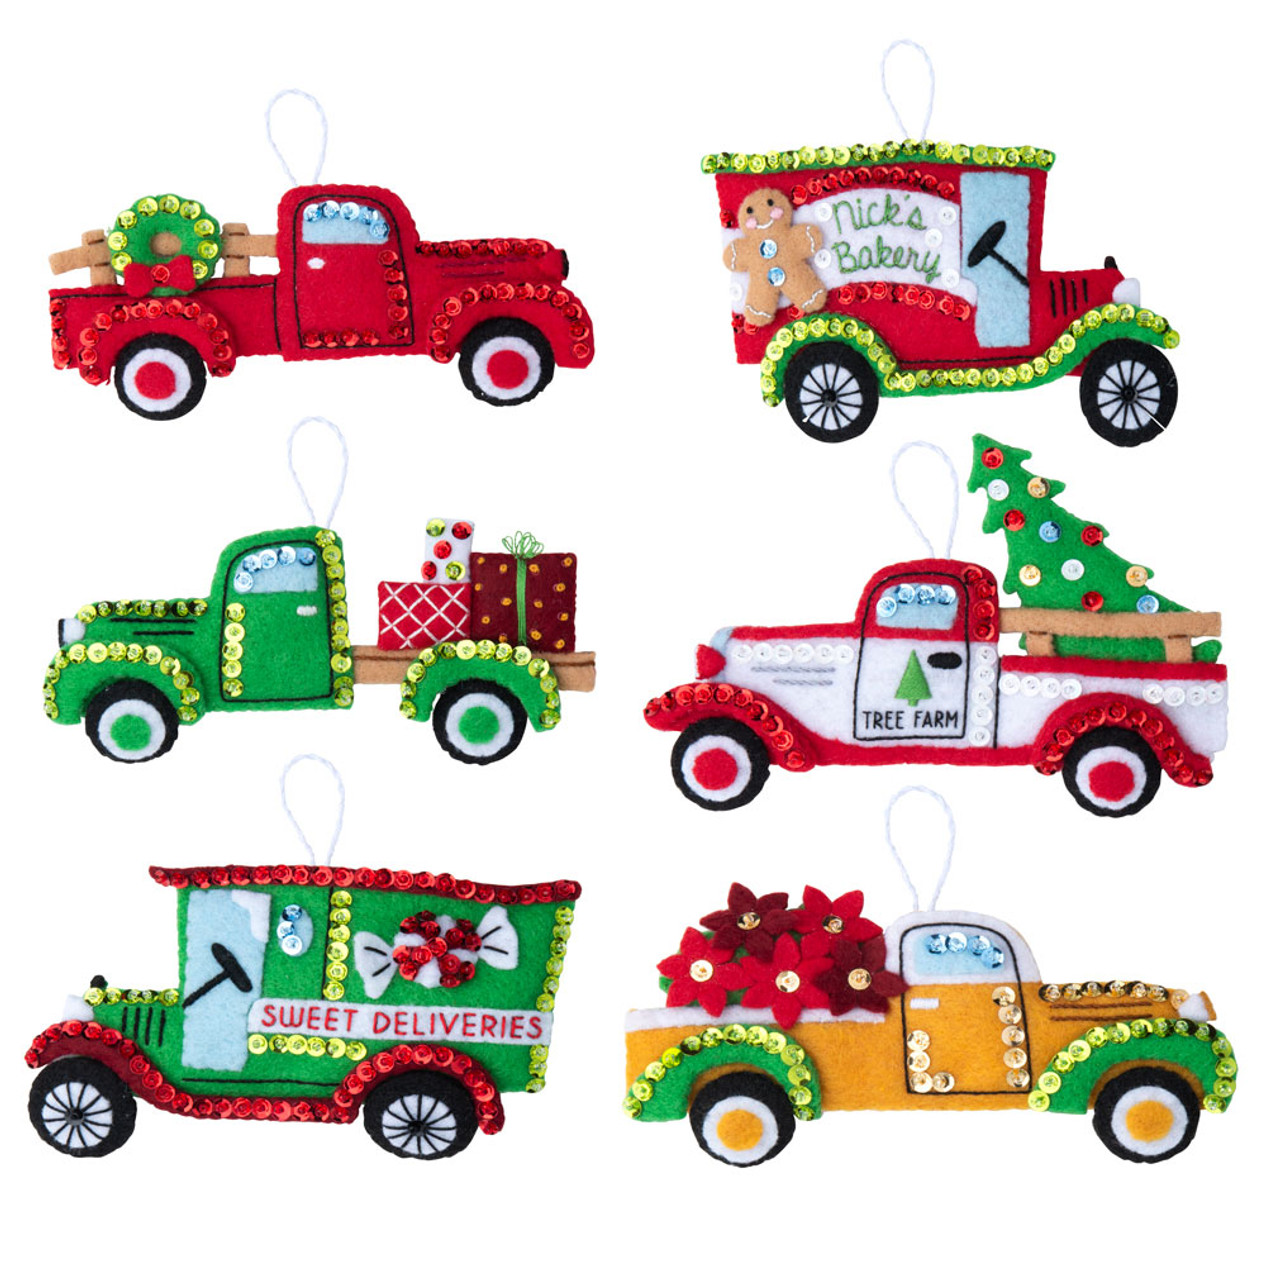 Bucilla Felt Applique DIY Holiday Ornament Kit, Vintage Trucks, Set of 6 